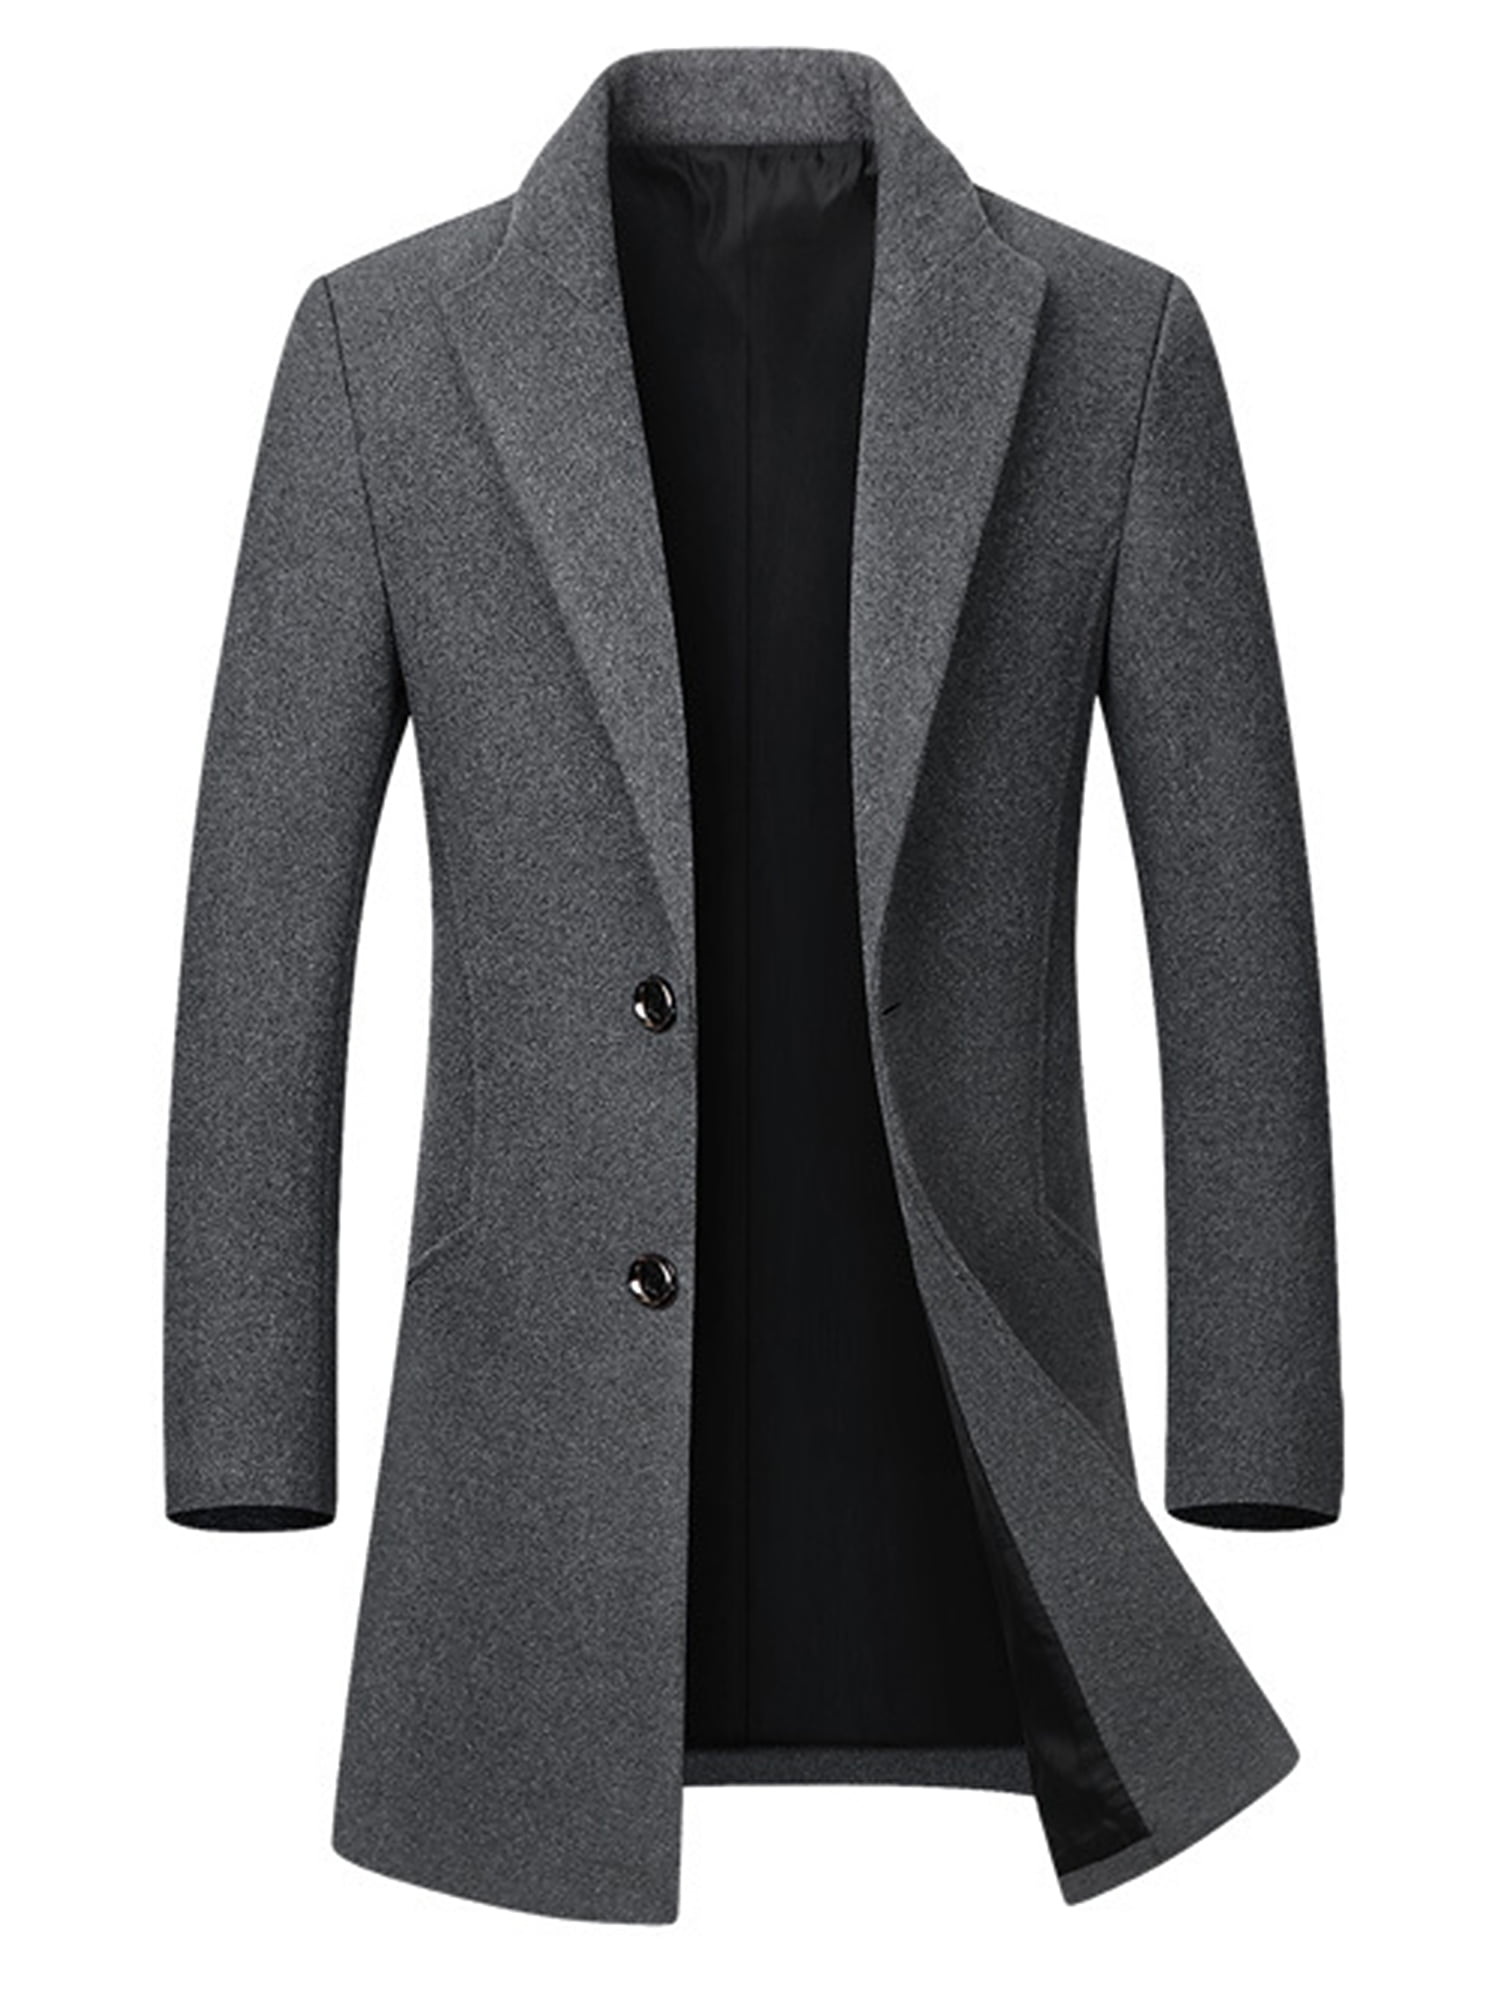 ONTBYB Mens Winter Pea Coat Wool Blend Single Breasted Jacket 